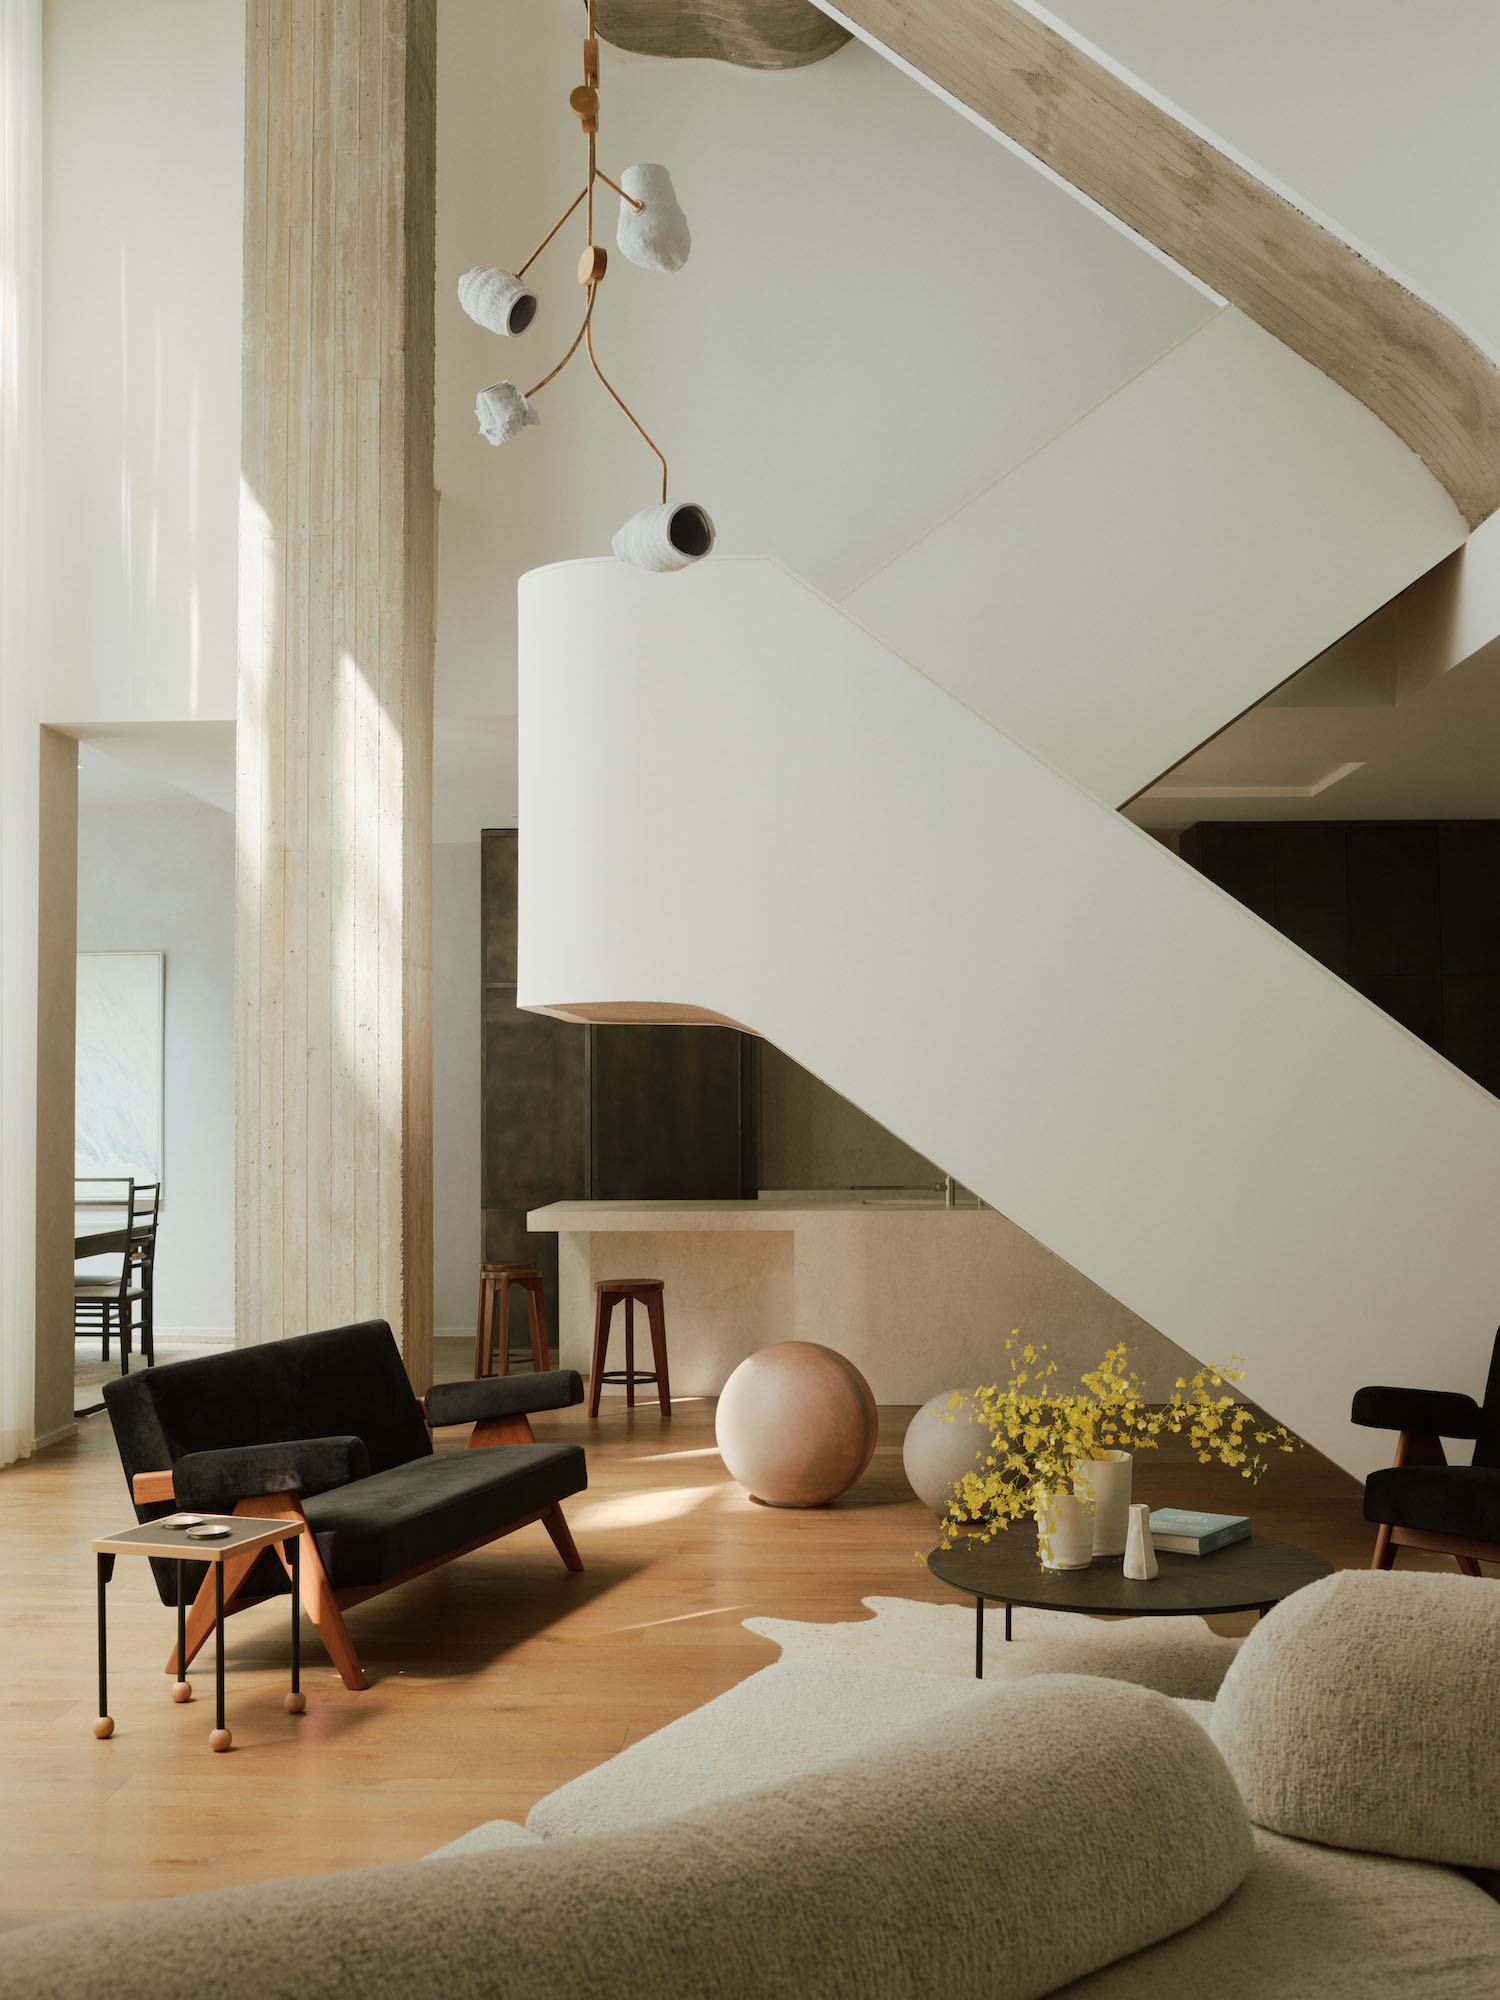 Jae Joo,阁楼设计,住宅设计,现代风格设计,纽约,复式公寓设计案例,极简主义,极简风格